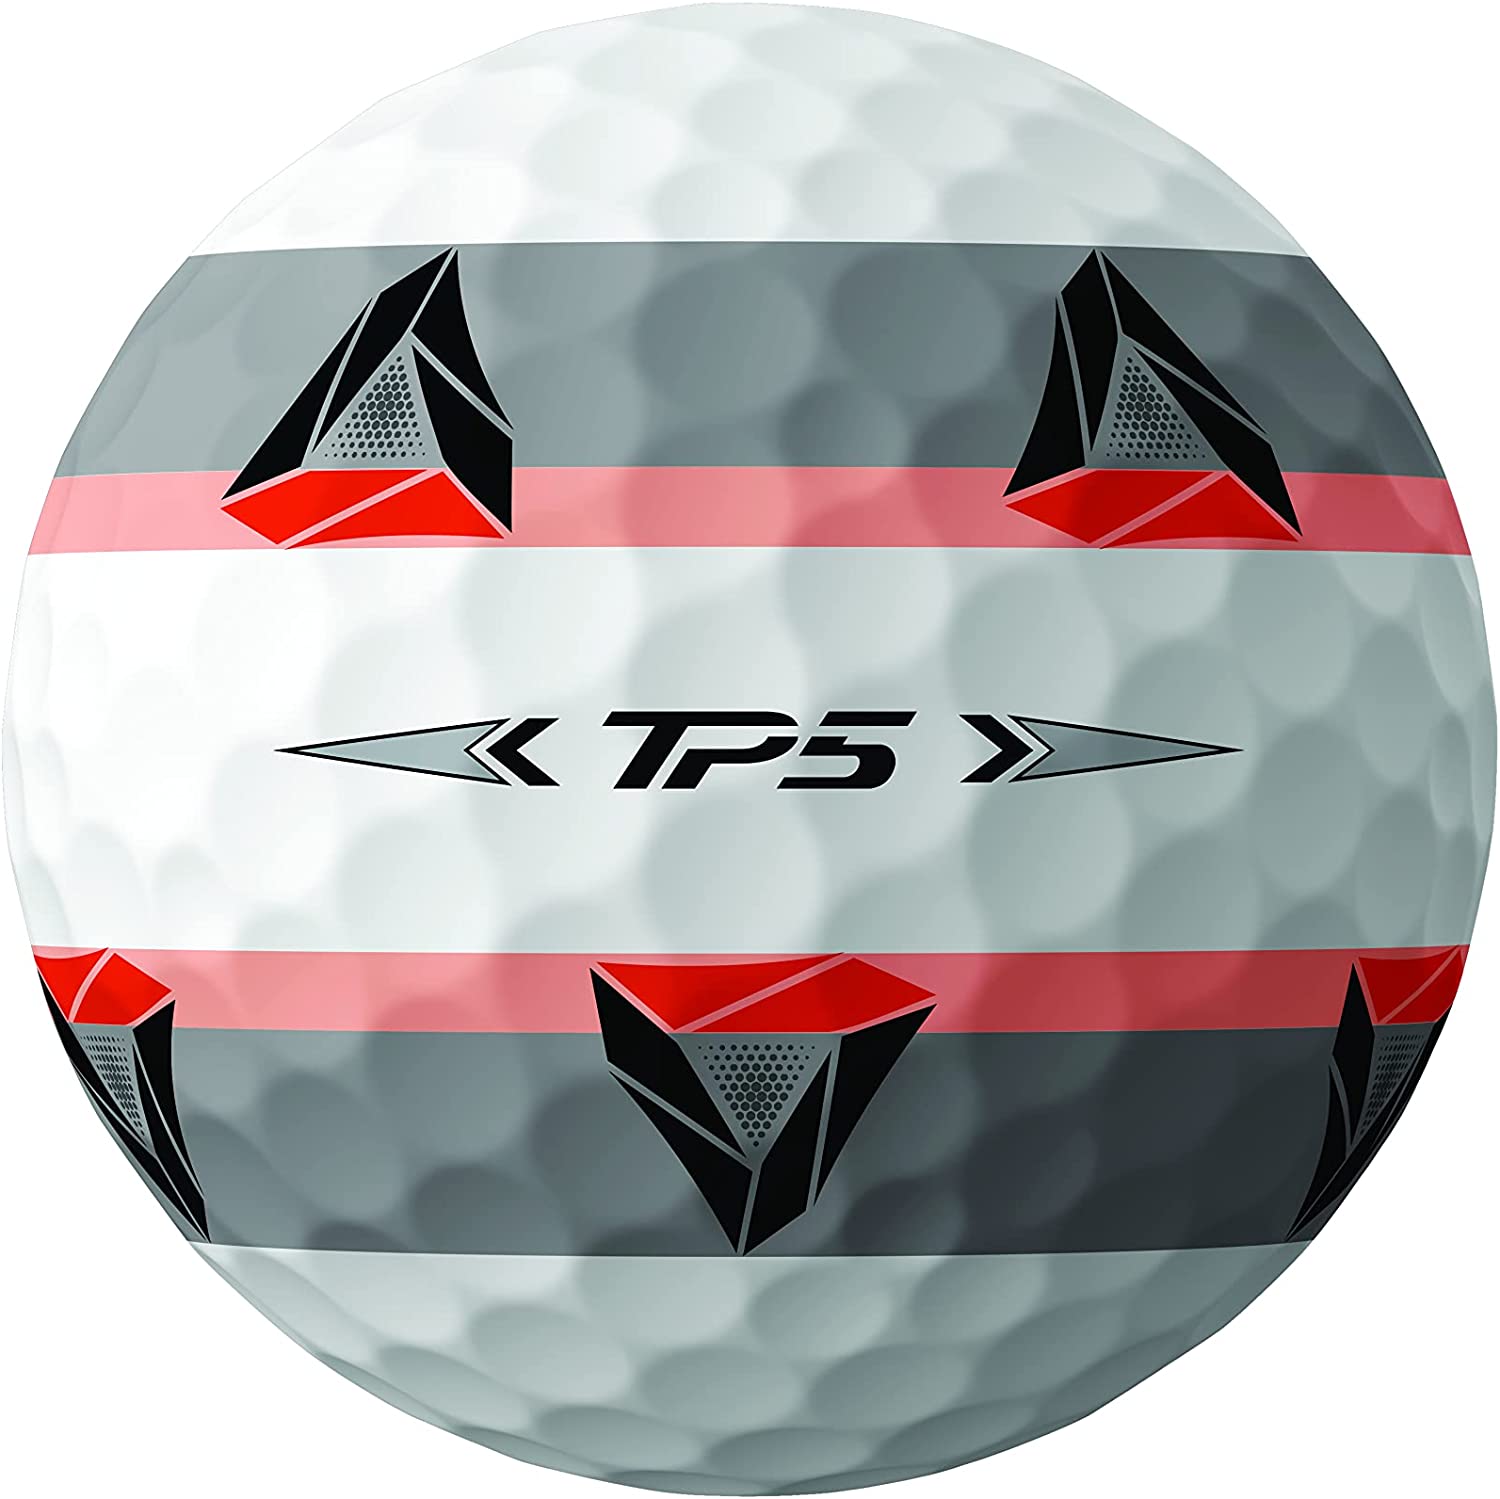 TaylorMade TP5 Pix and TP5X Pix Golf Balls 2